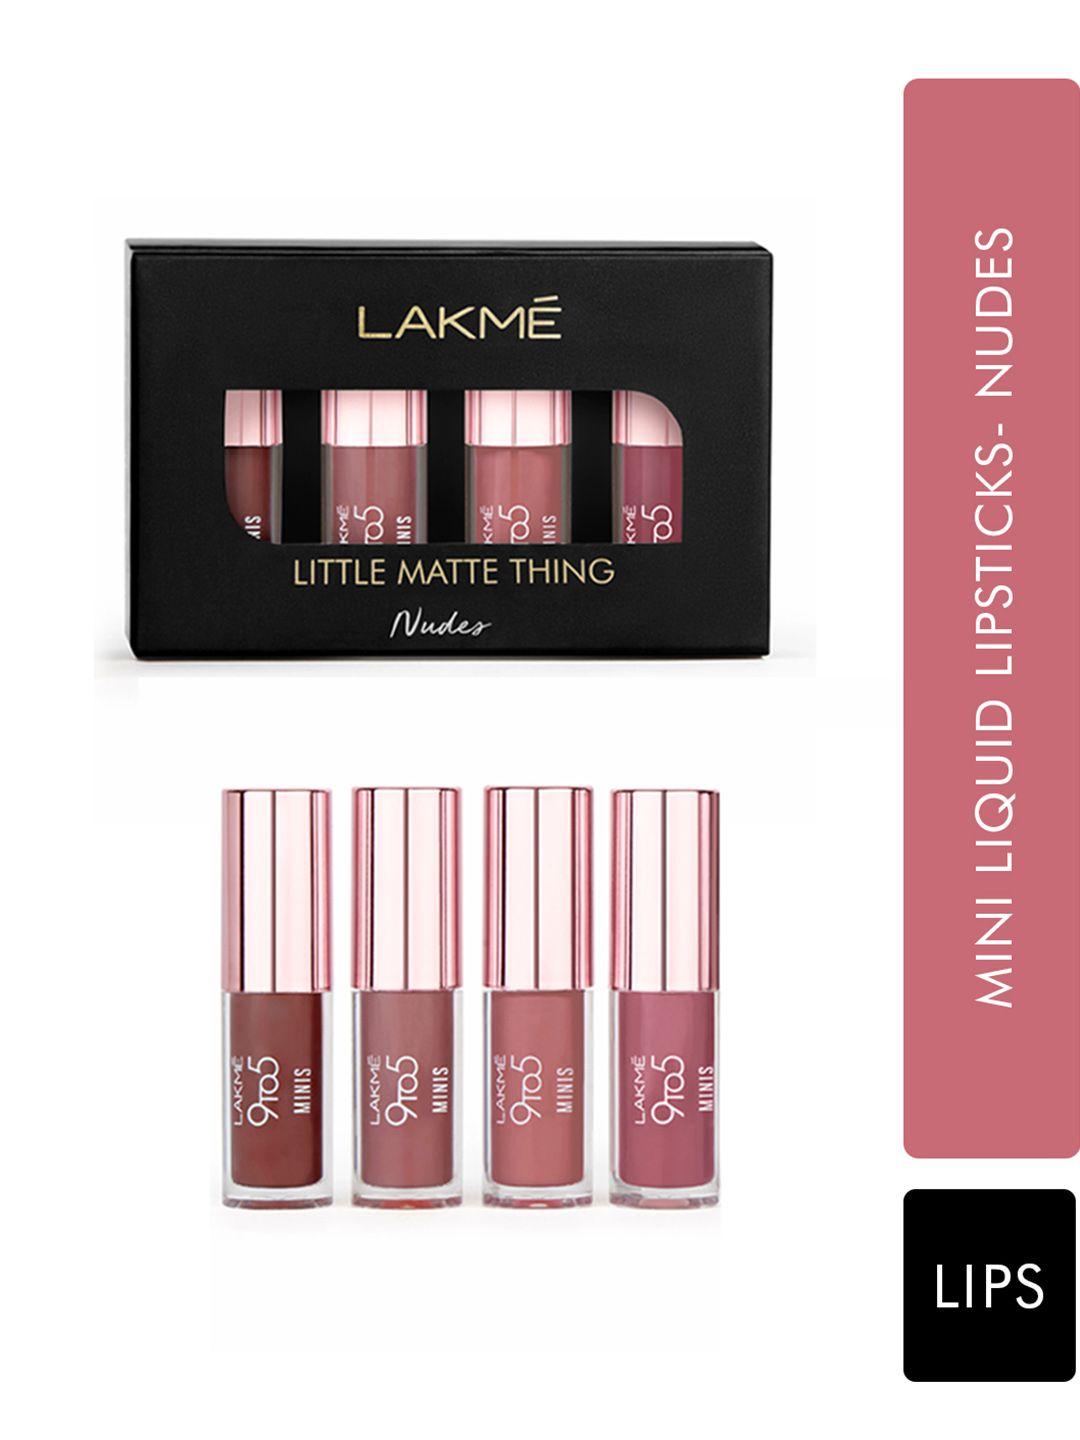 Lakme 4 Pcs Little Matte Thing 9To5 Primer + Matte Mini Liquid Lipsticks 2ml Each - Nudes